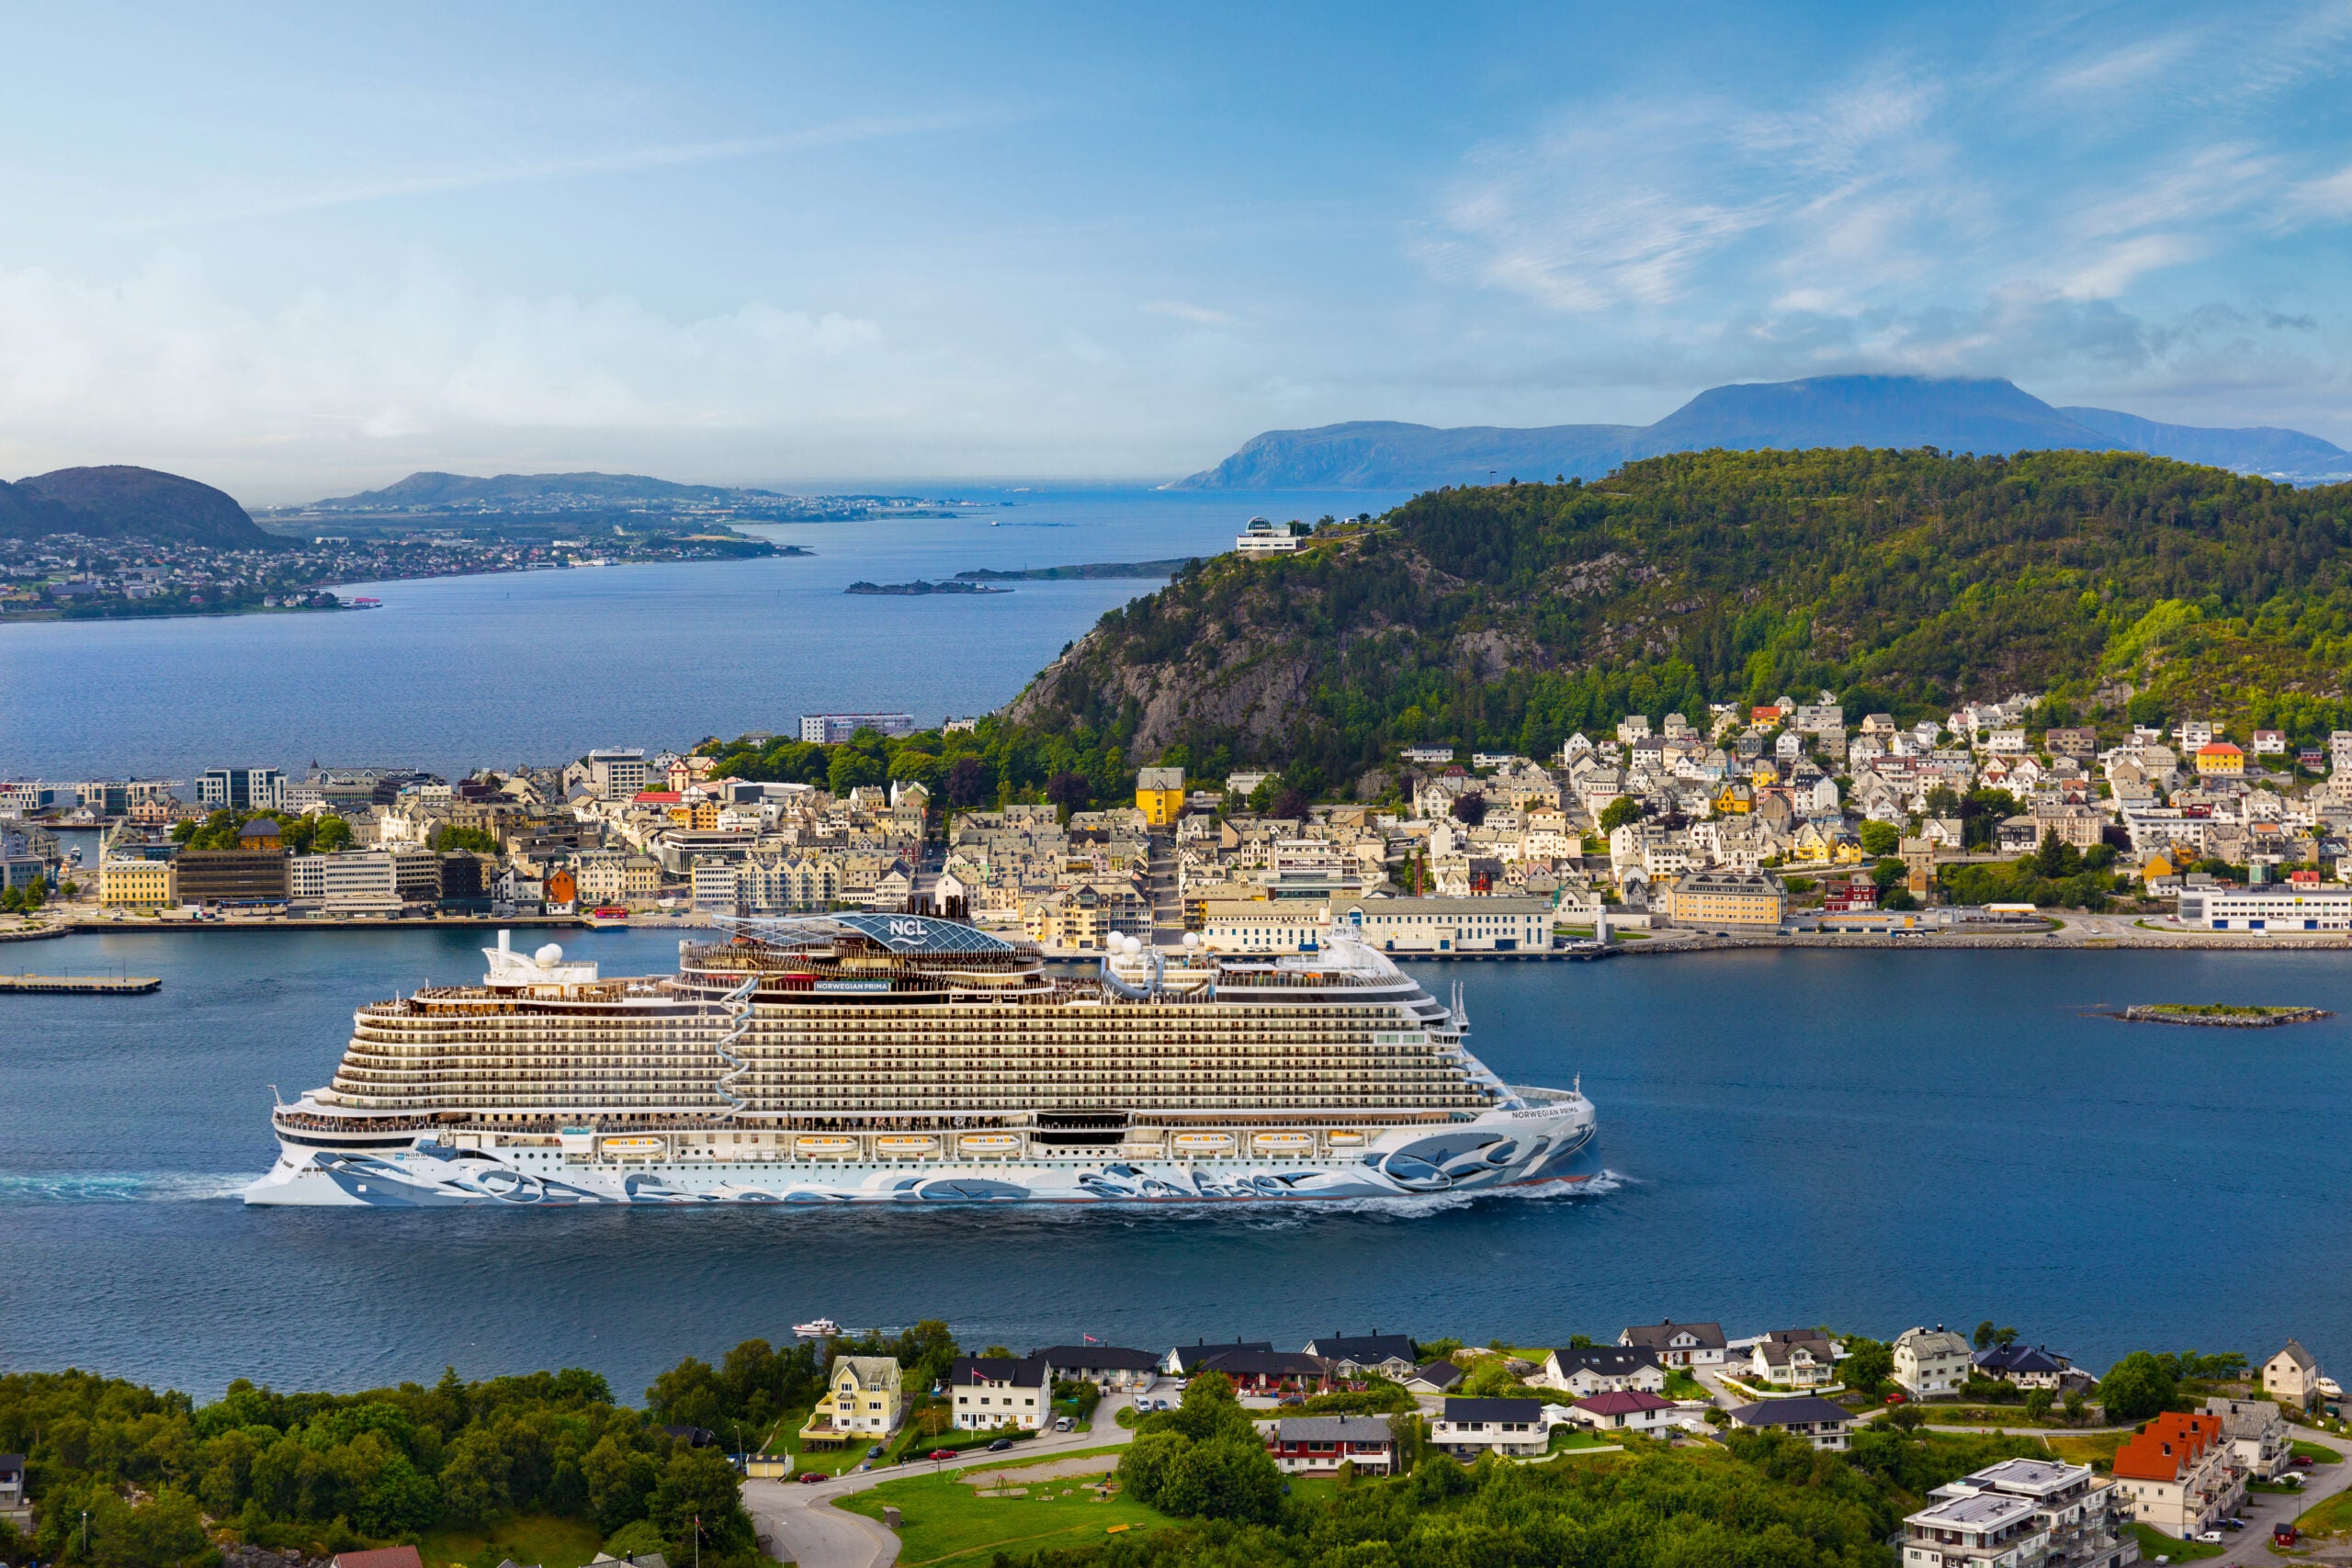 norwegian cruises best ships